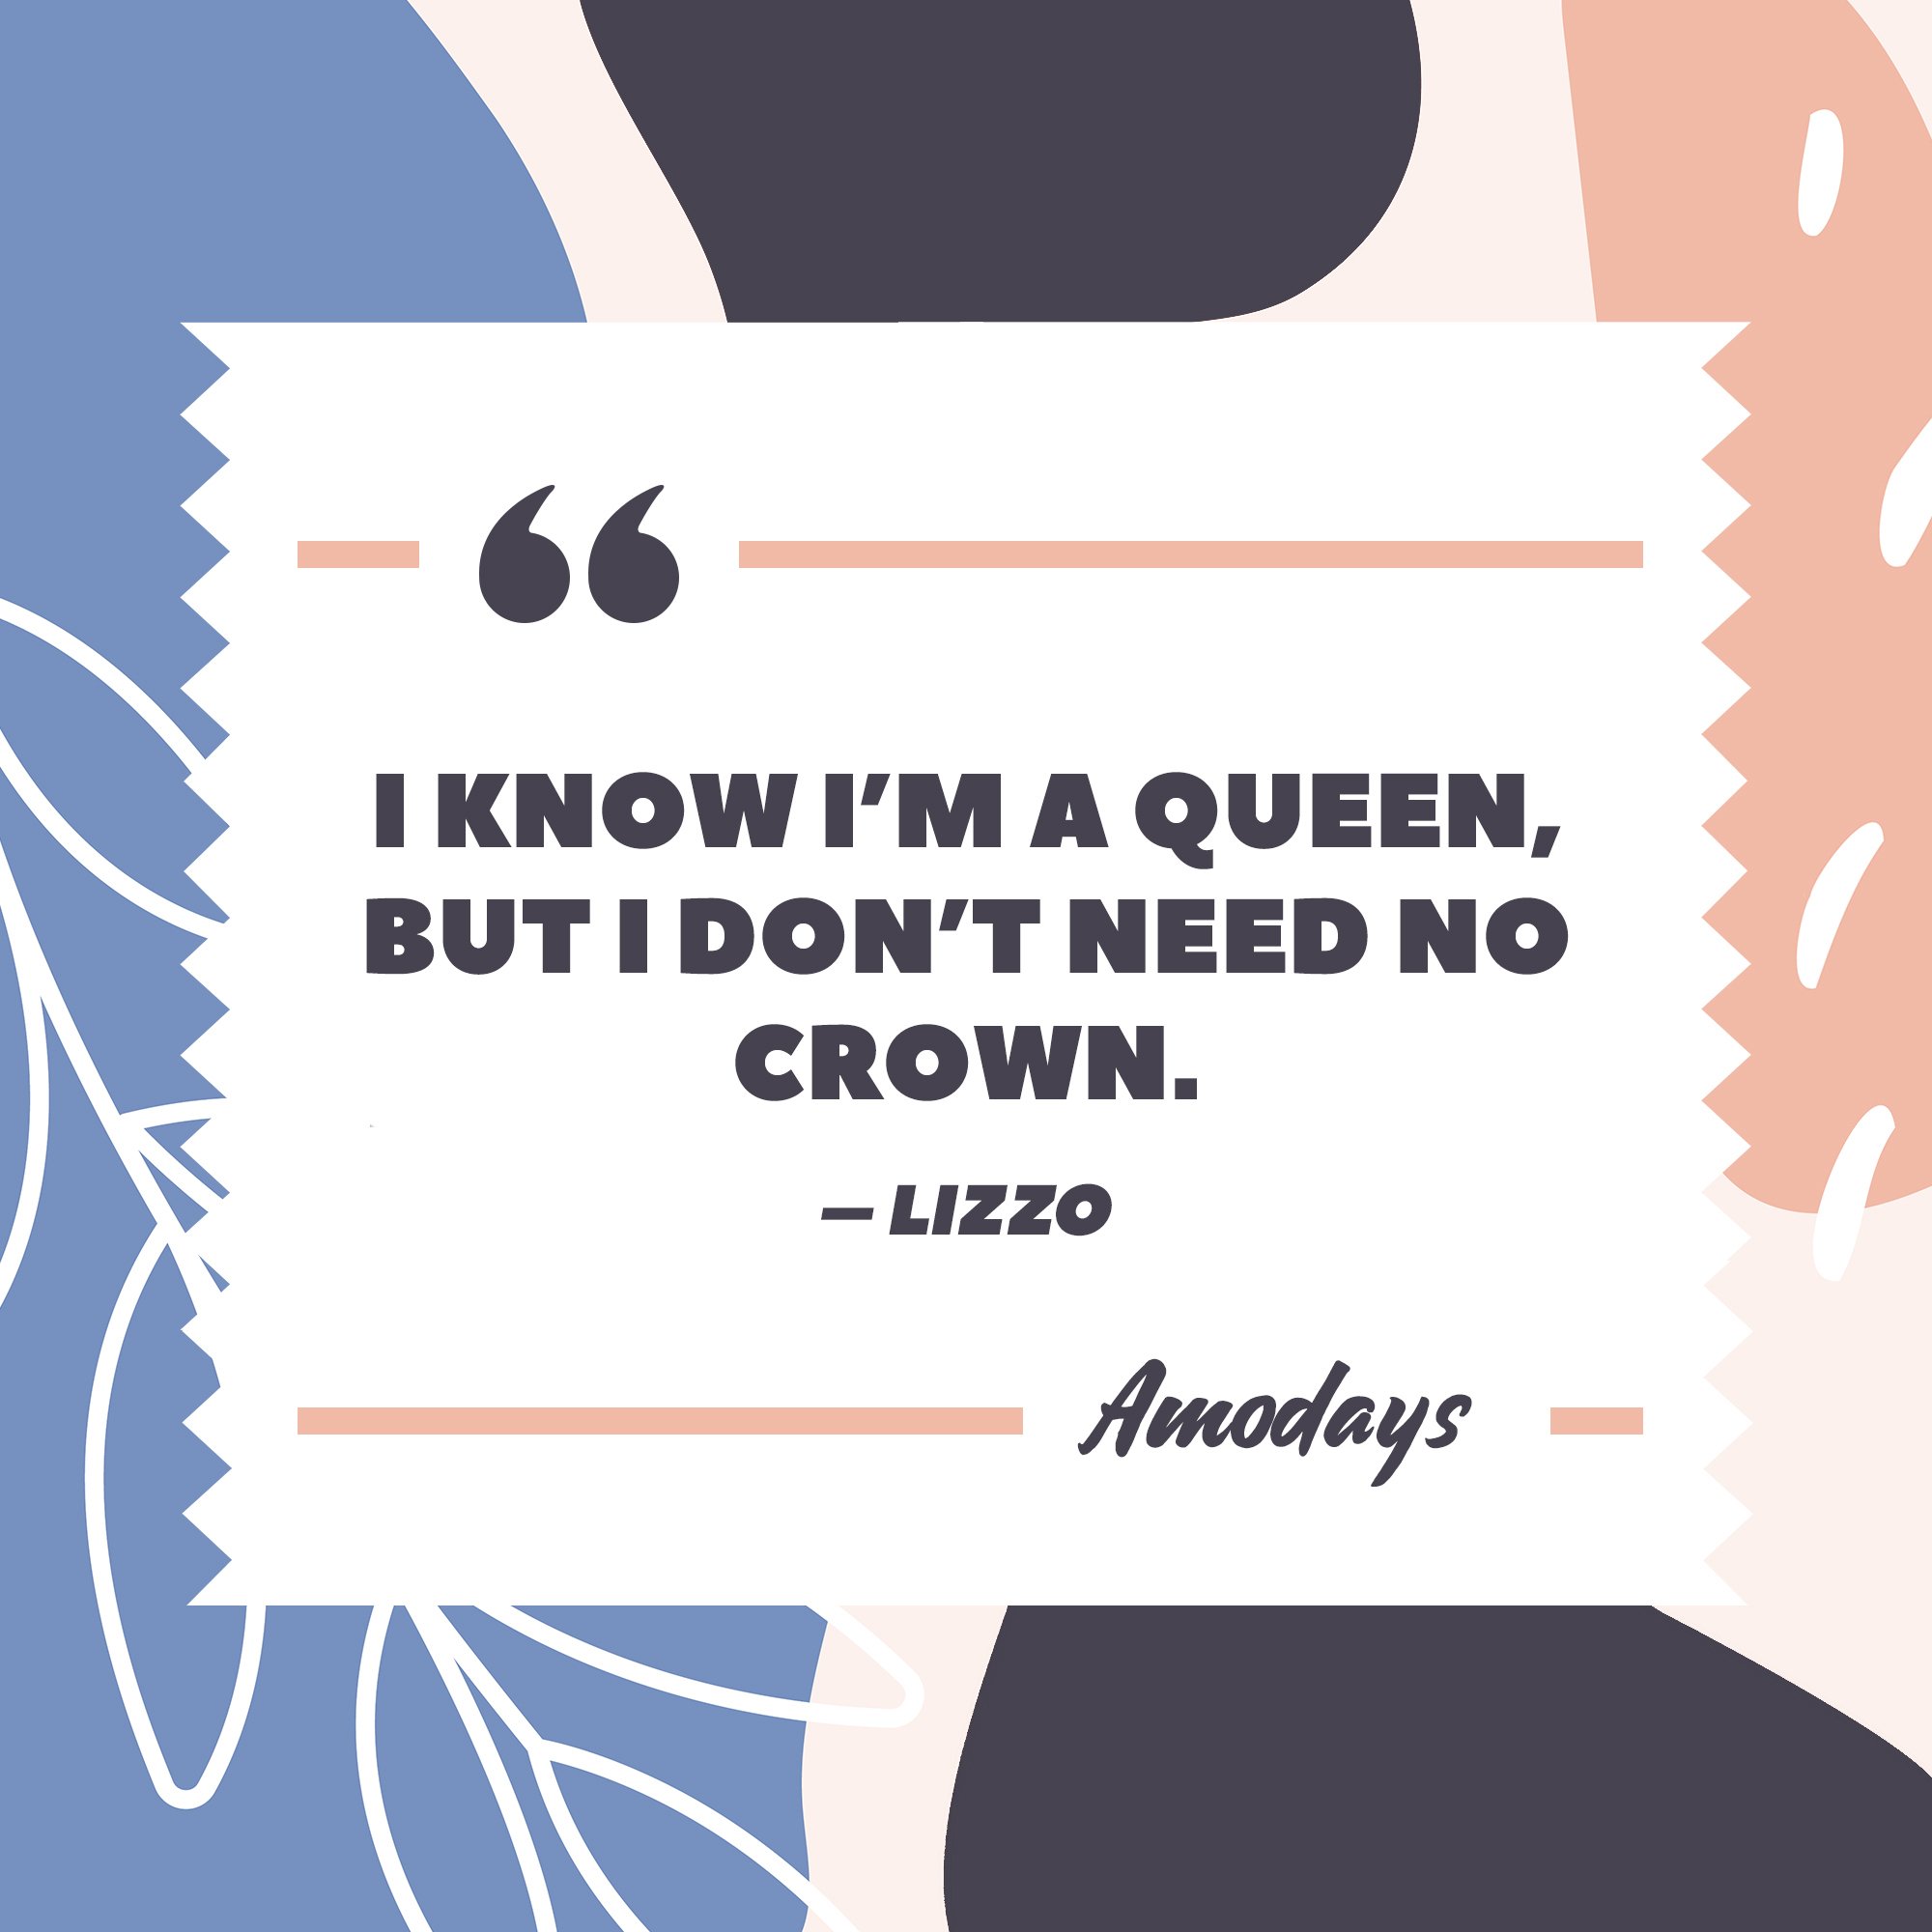 Lizzo's quote “I know I’m a queen, but I don’t need no crown.” | Image: AmoDays